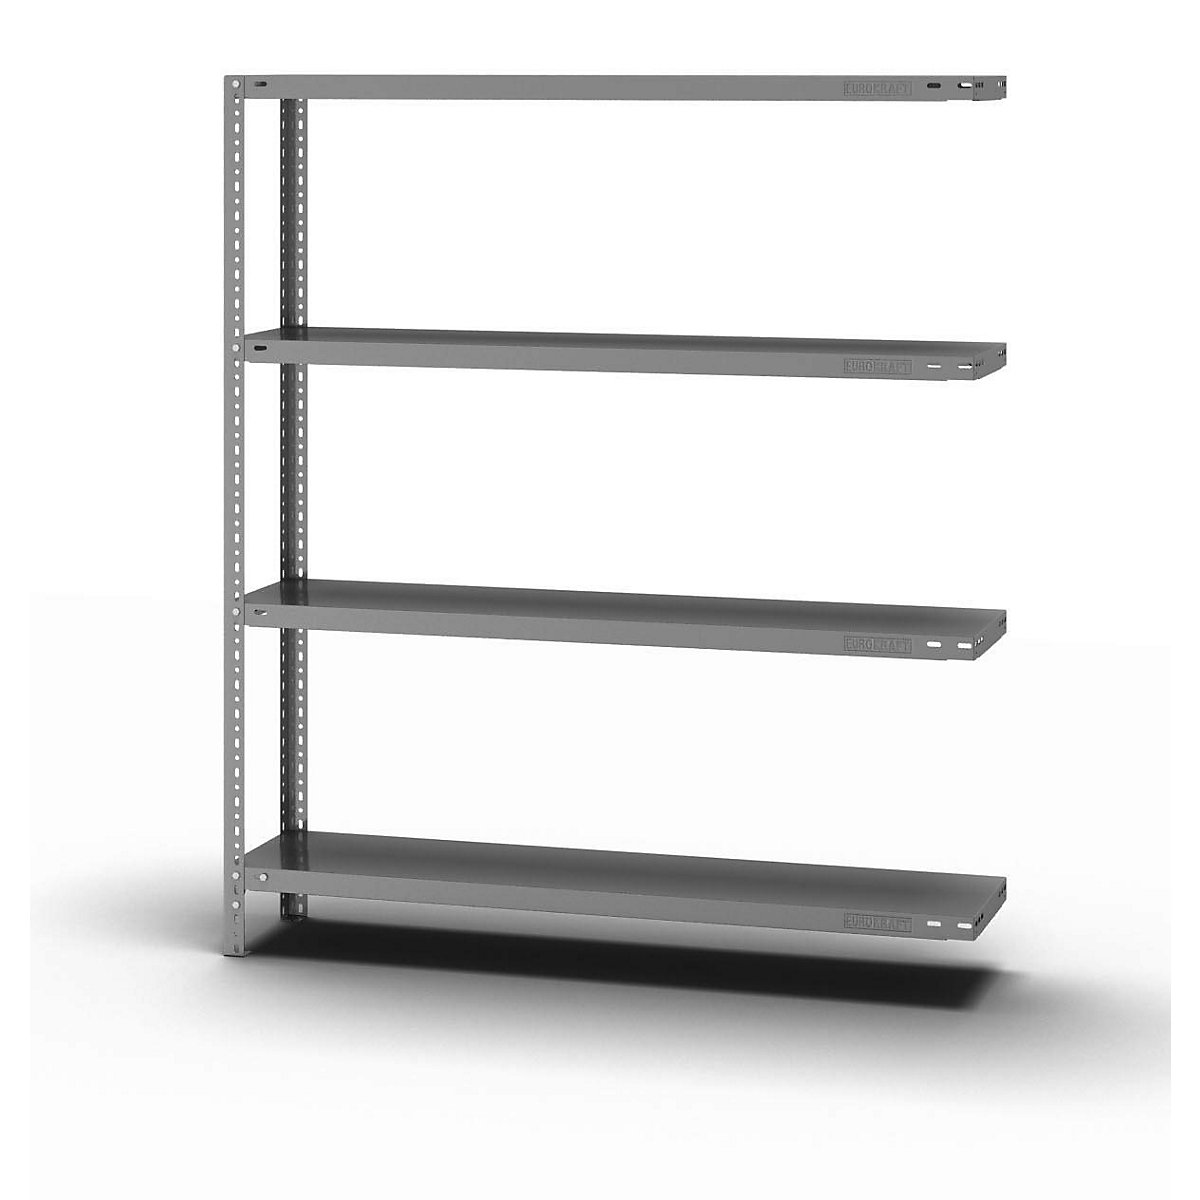 Bolt-together storage shelving, zinc plated, medium duty – eurokraft pro, shelf unit height 1500 mm, shelf width 1300 mm, depth 300 mm, extension shelf unit-14